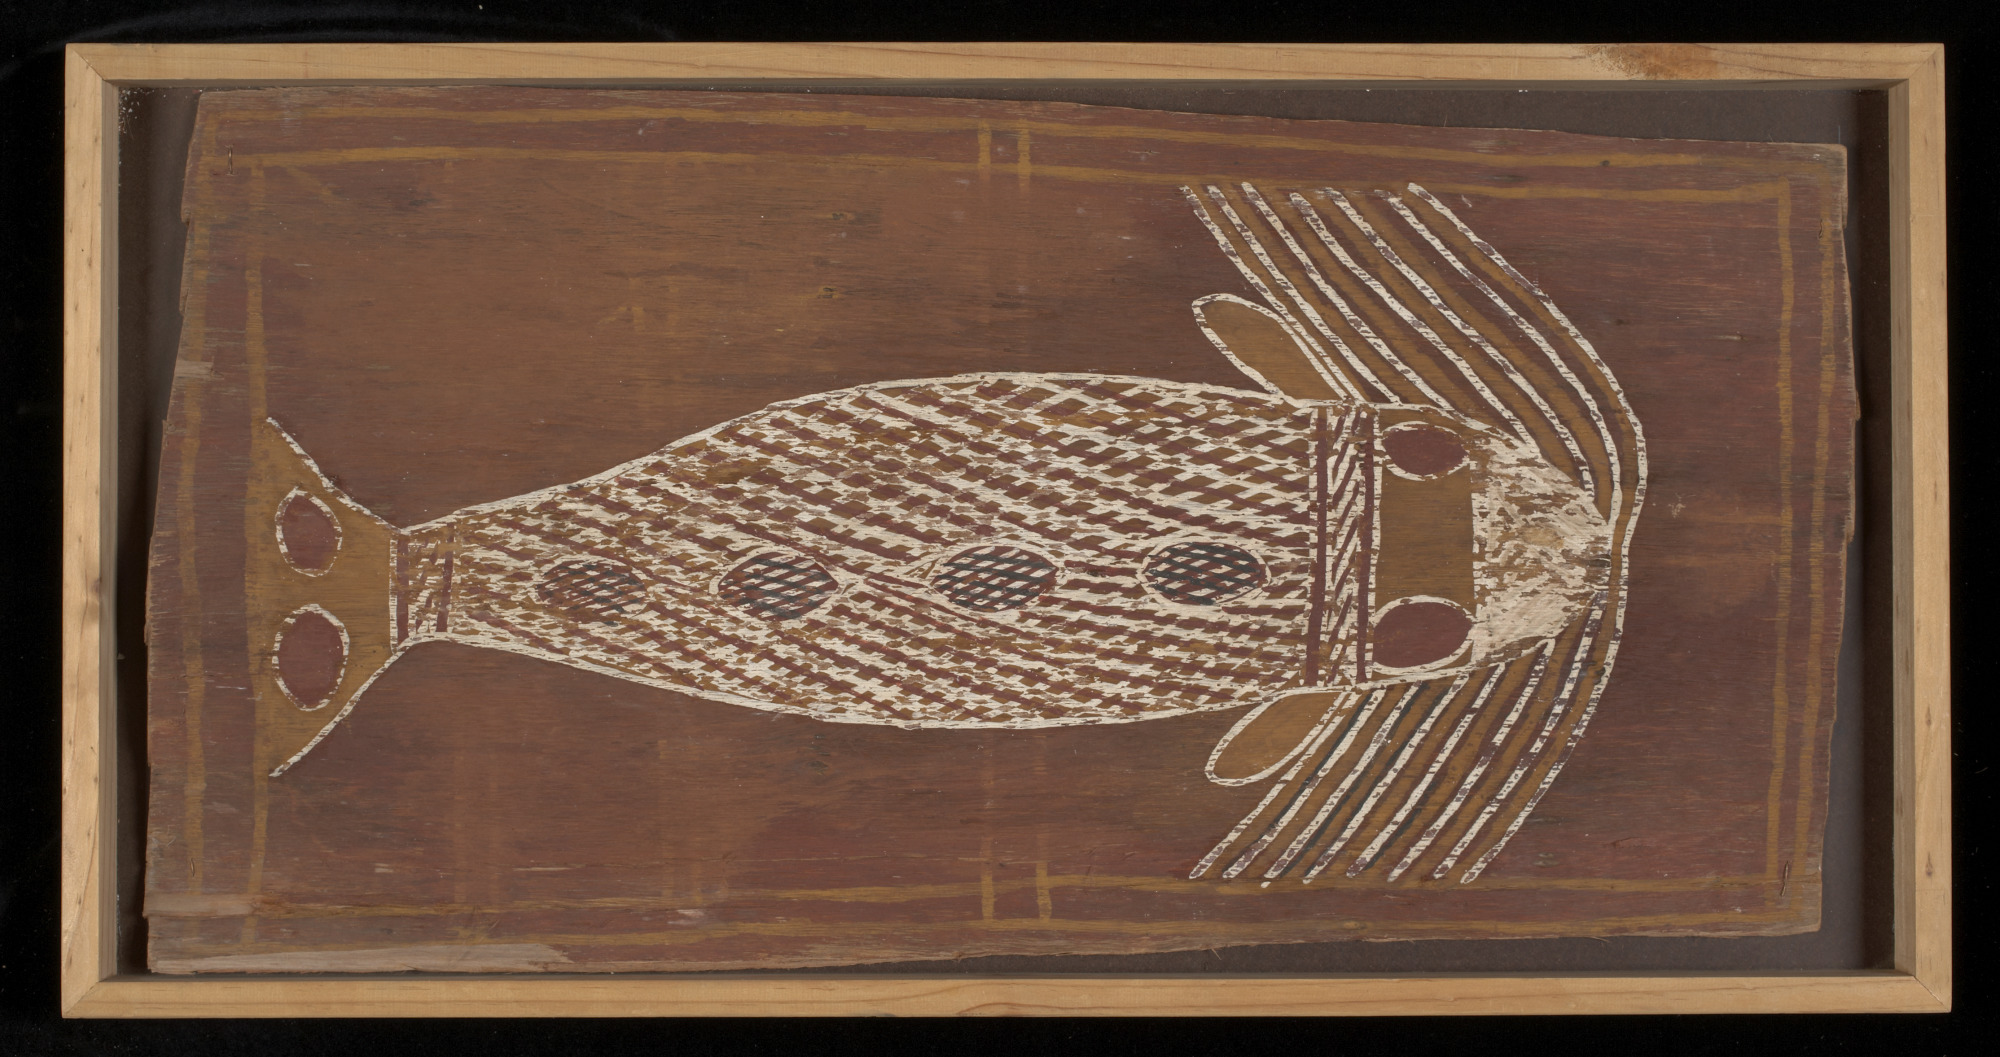 The Whale, Dianmeri, by Mawalan Marika, Yirrkala (Northern Territory), 1948.